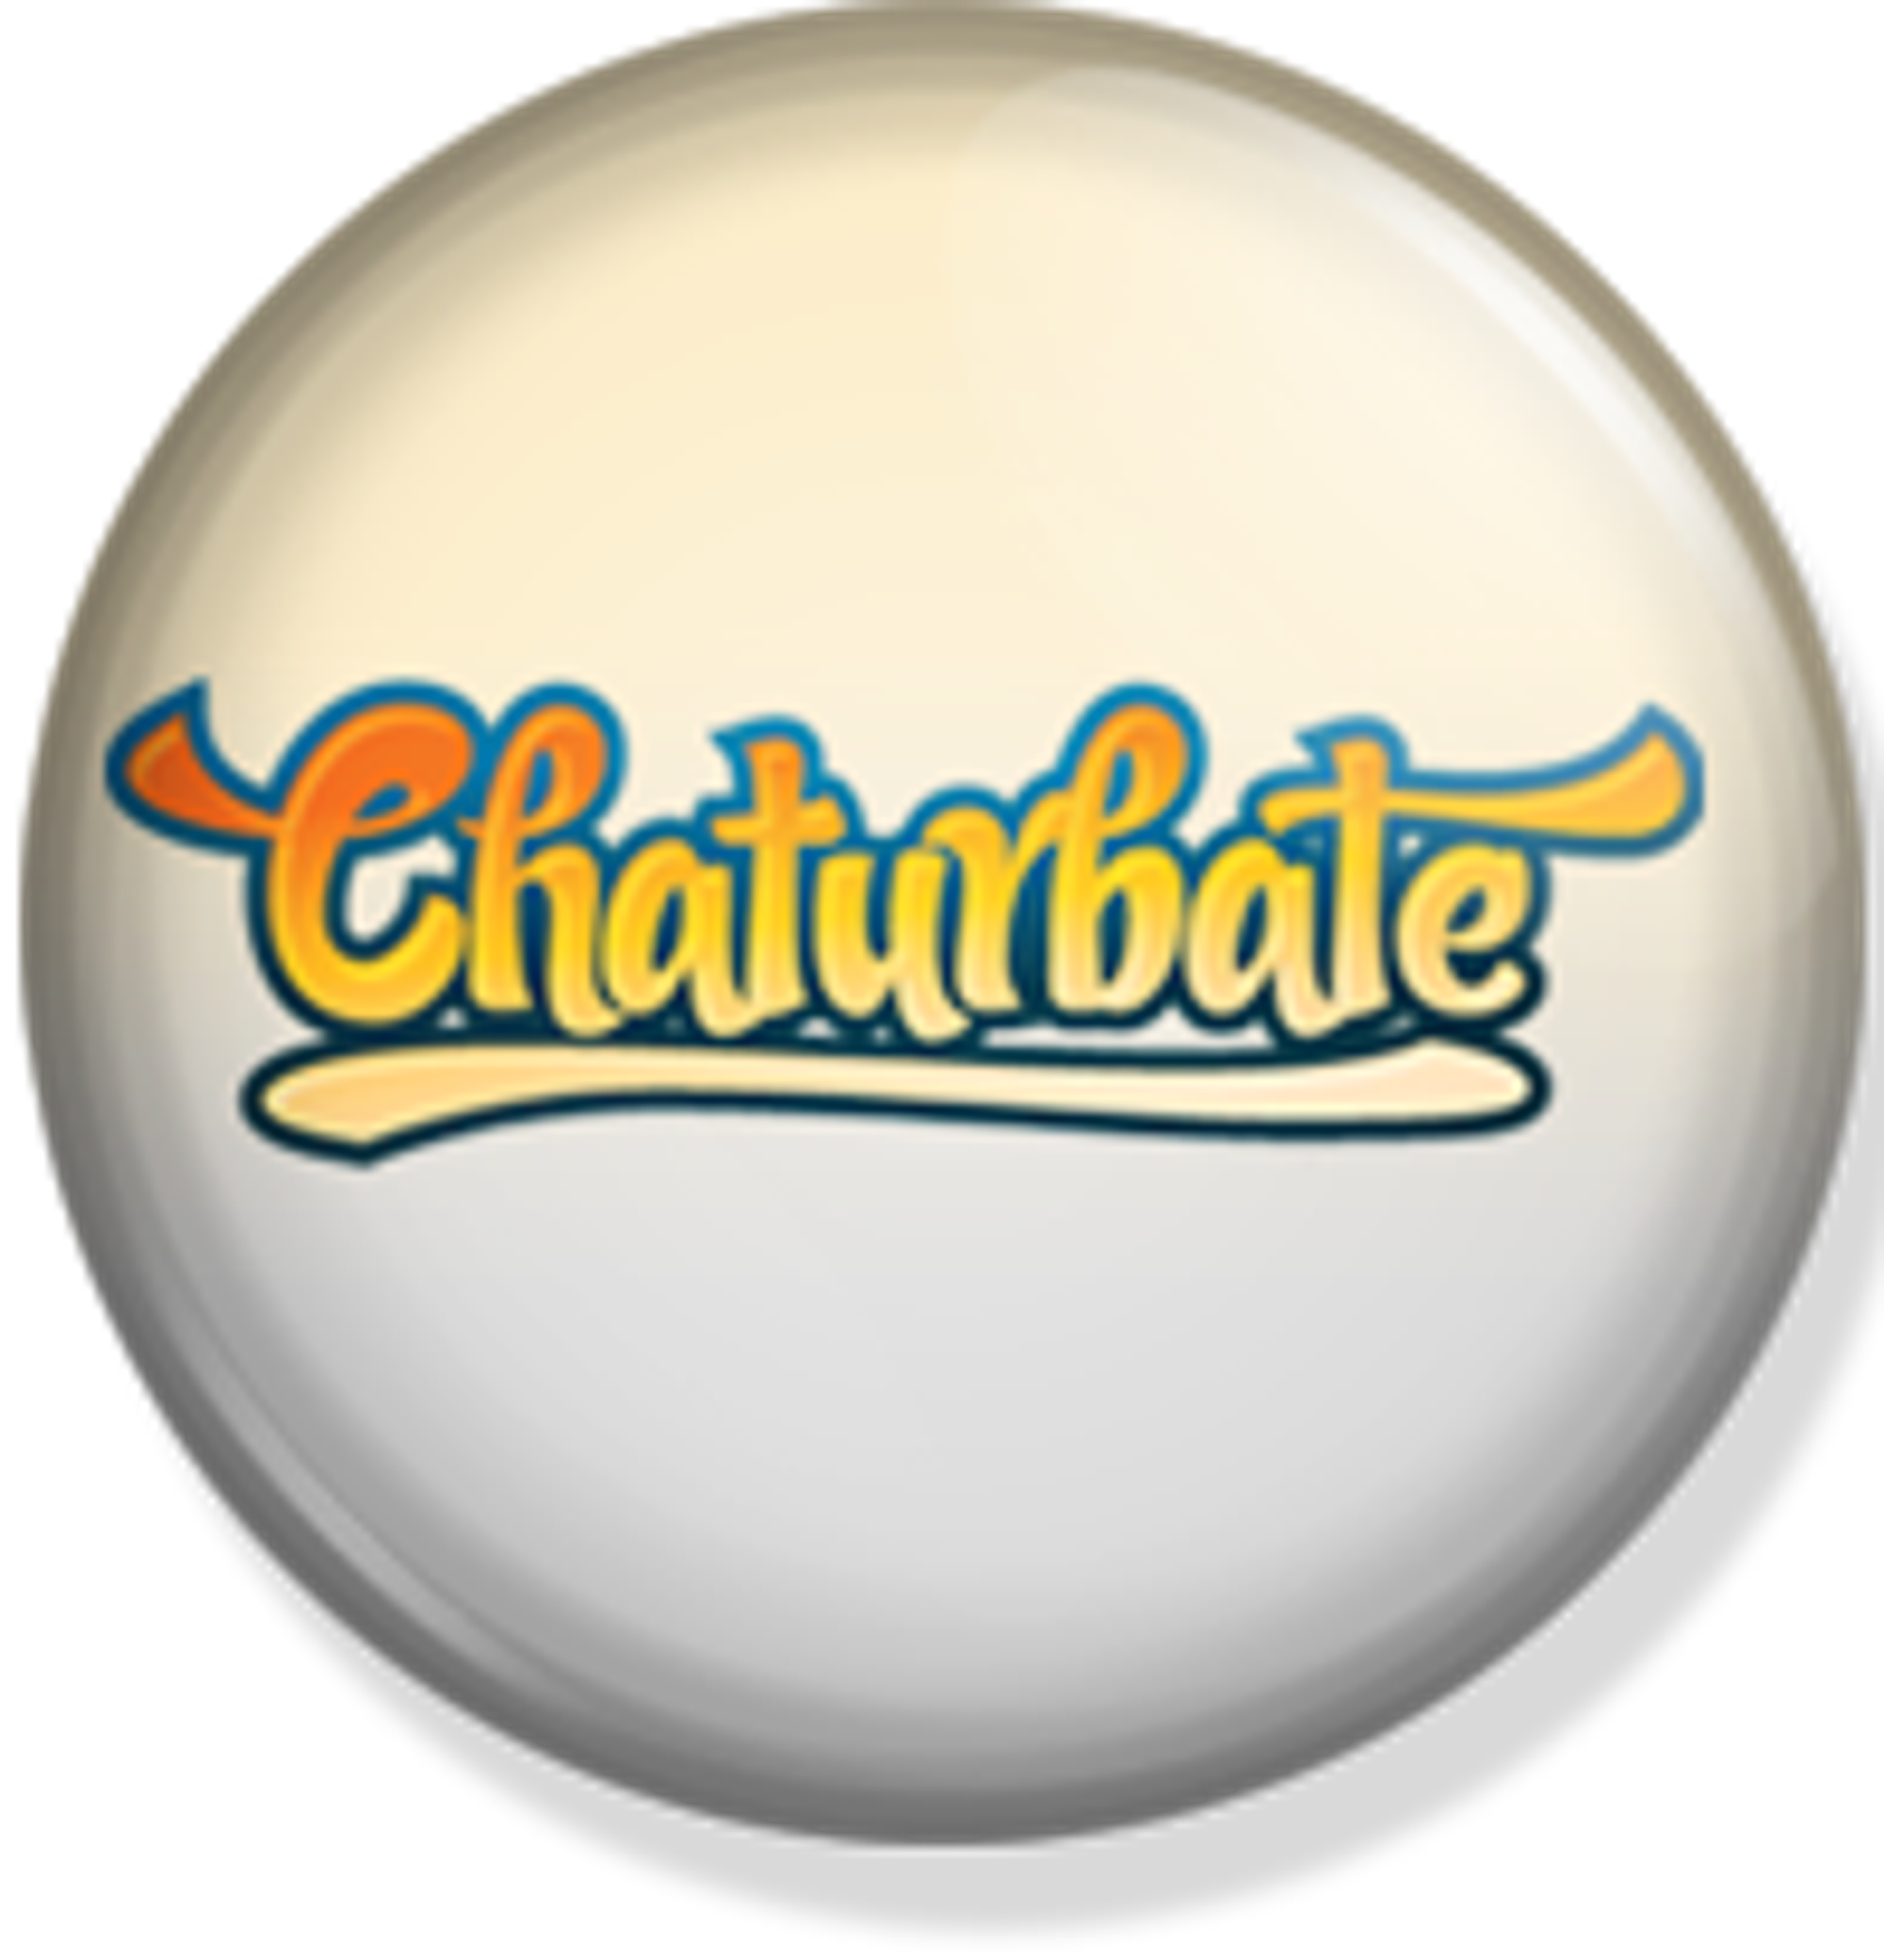 Token online free chaturbate generator Chaturbate